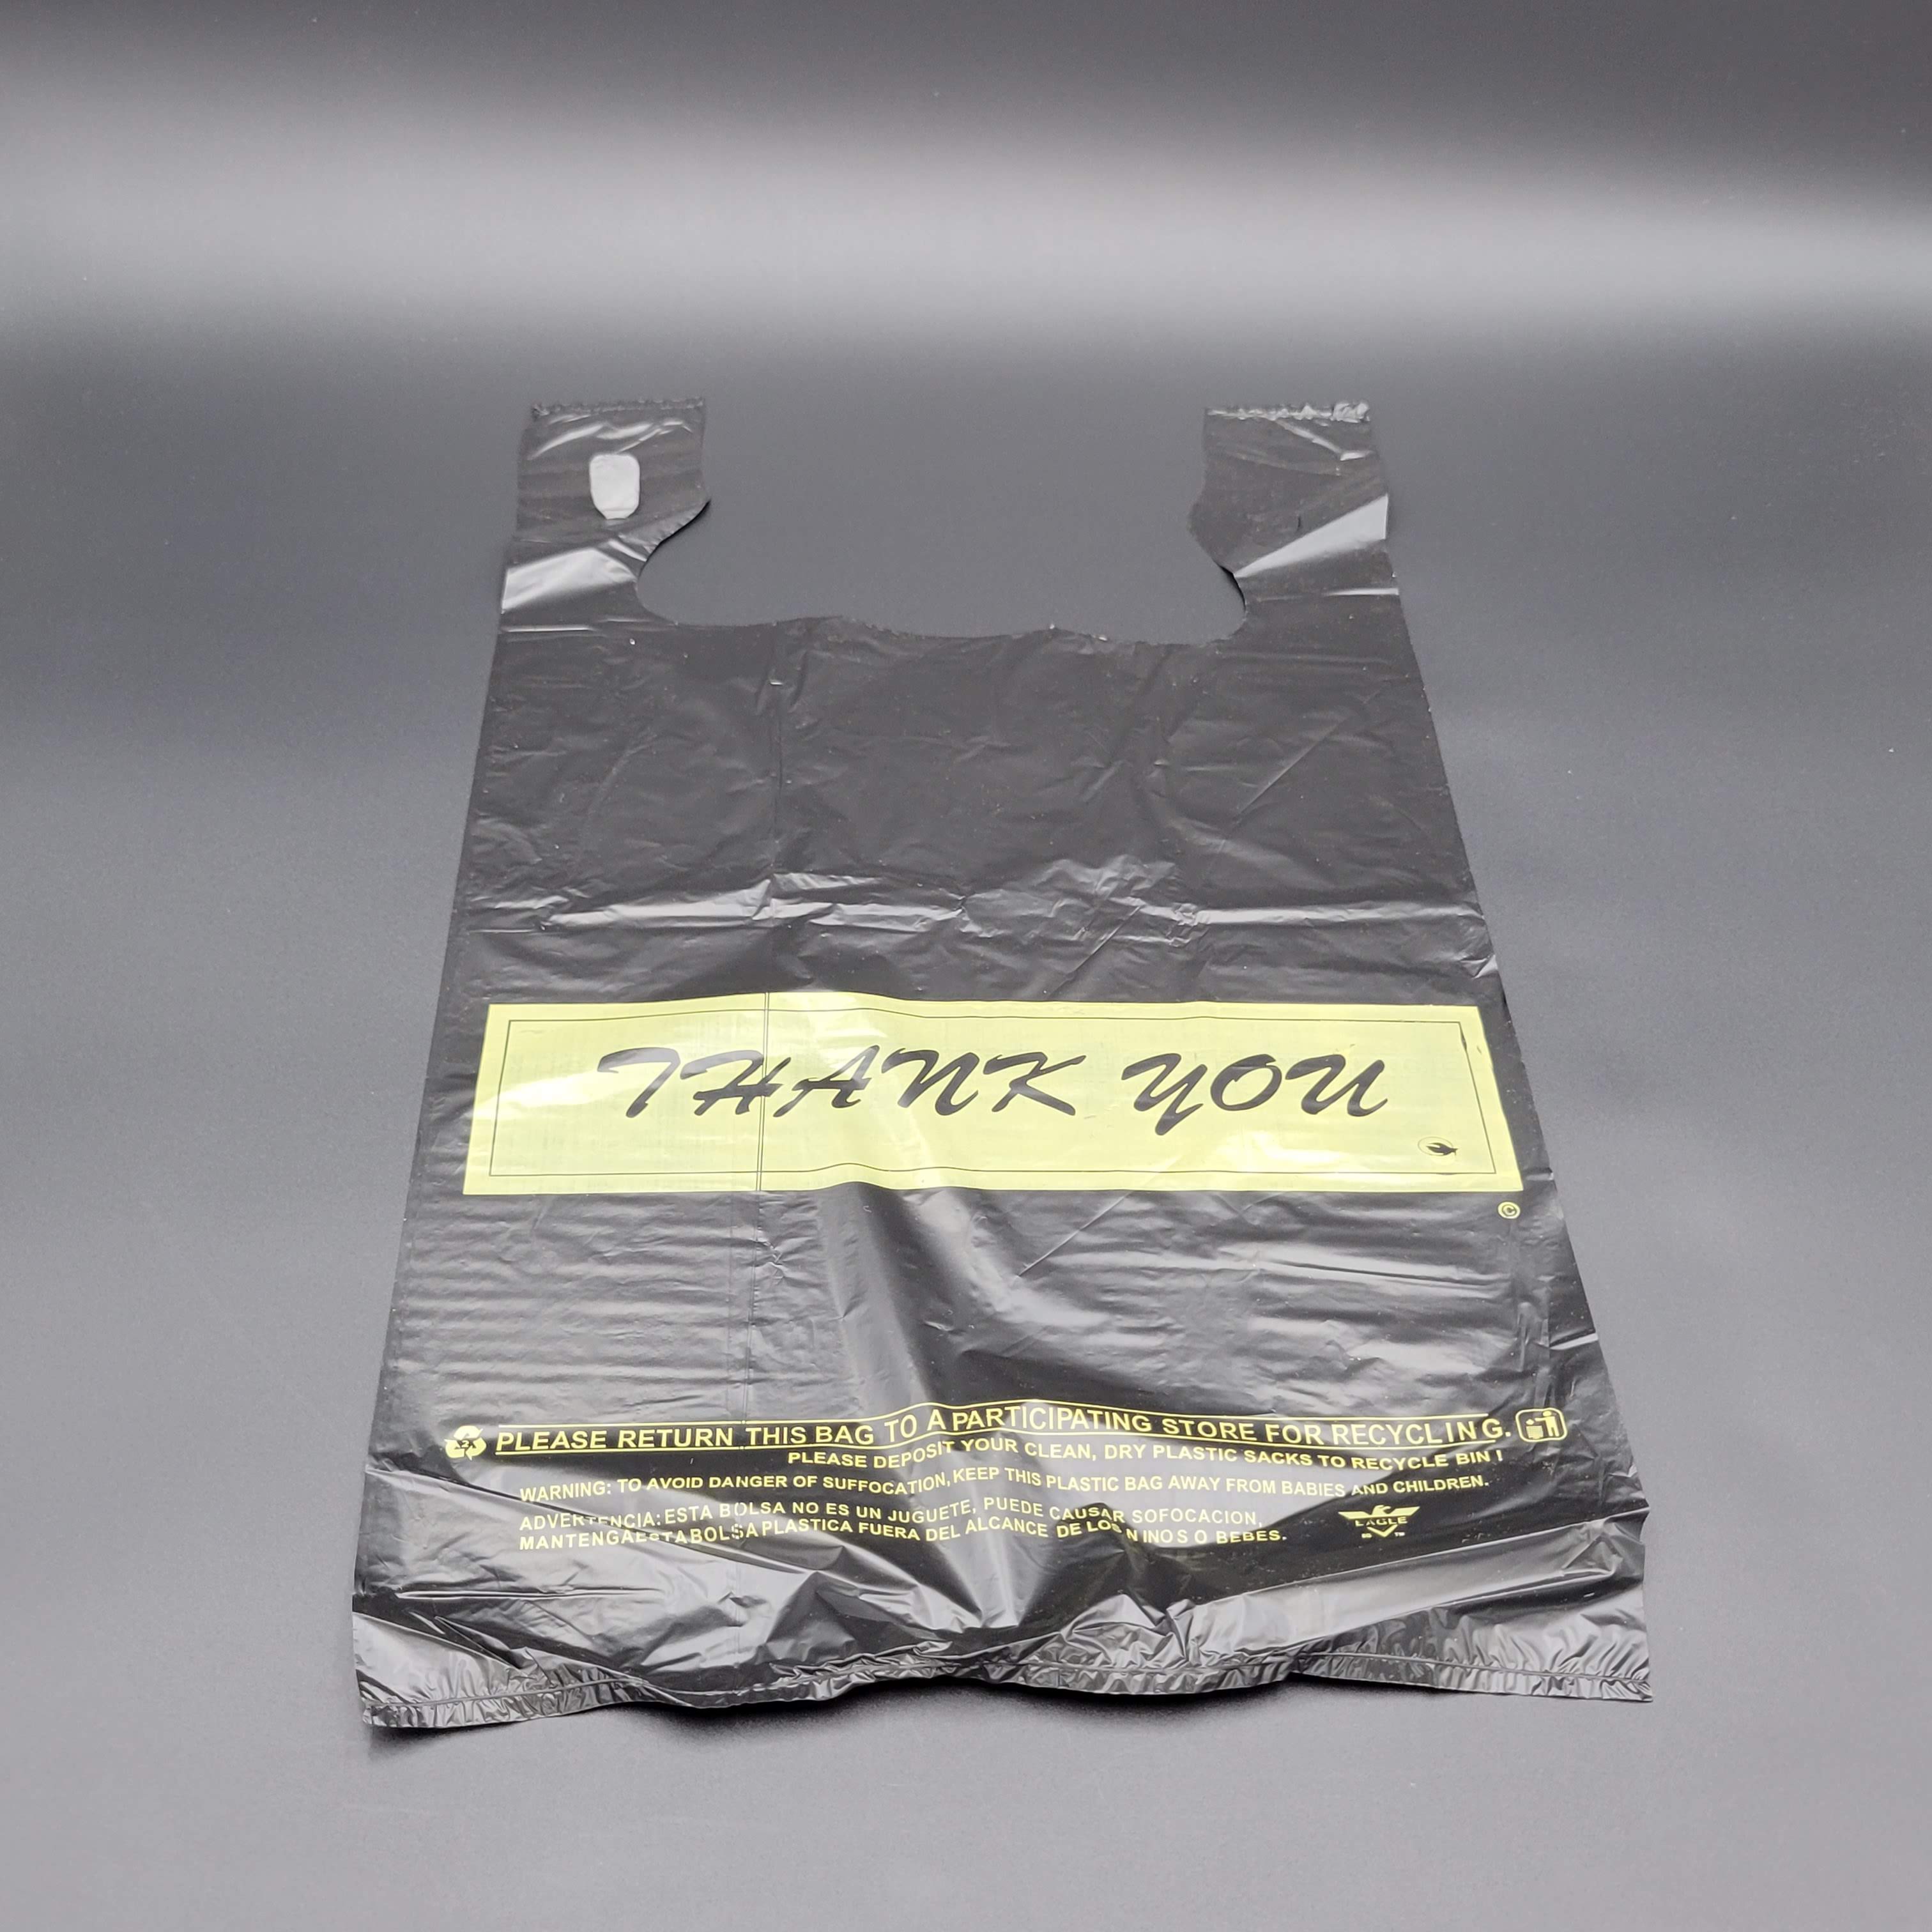 Black Heavy-Duty Plastic "Thank You" Bag 1/6 Size - 500/Case